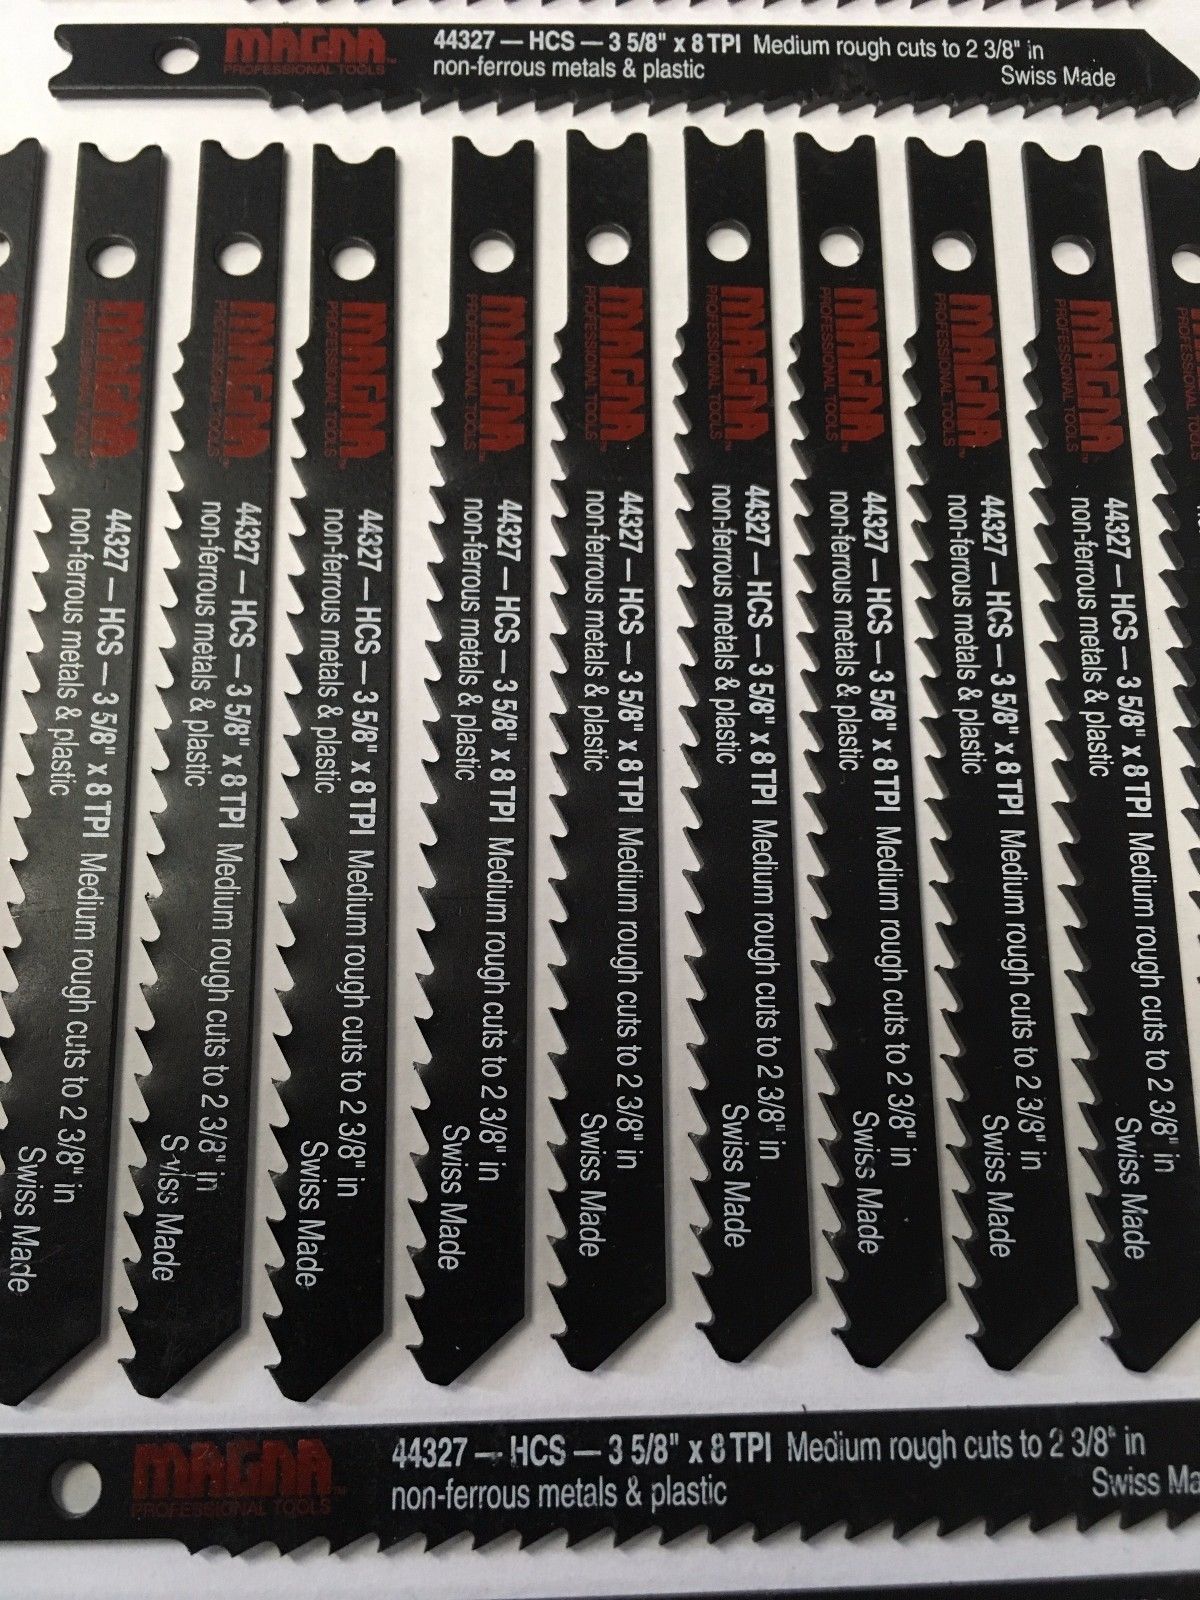 Magna 44327 3-5/8" x 8TPI Jig Saw Blades Med Rough Cuts Non Ferrous 20pcs Swiss